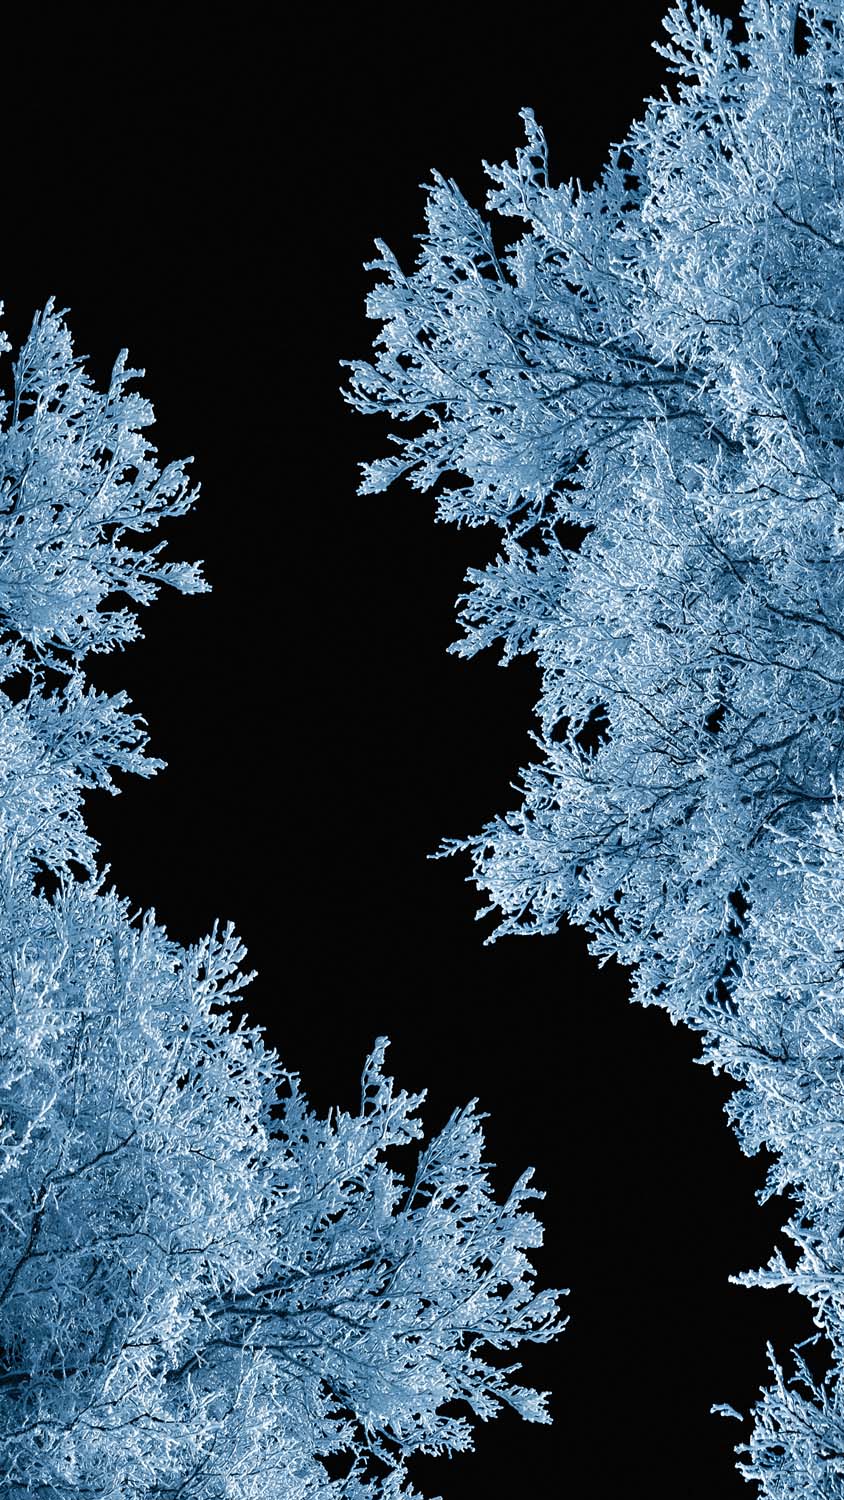 Night Snow Trees IPhone Wallpaper HD - IPhone Wallpapers : iPhone Wallpapers